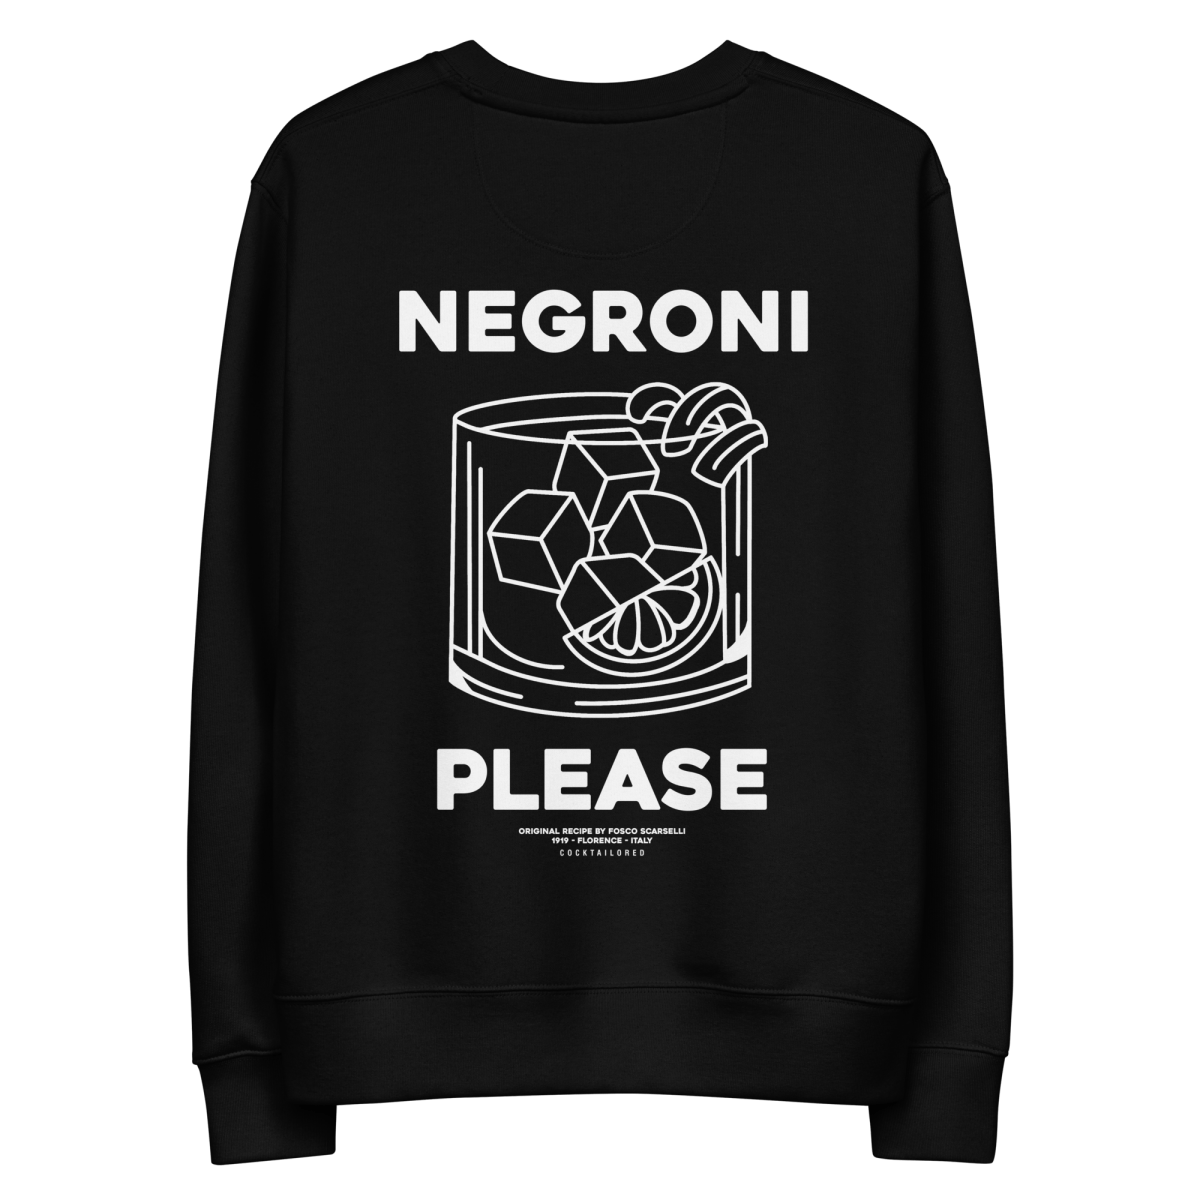 The Negroni Pls. Eco Sweatshirt